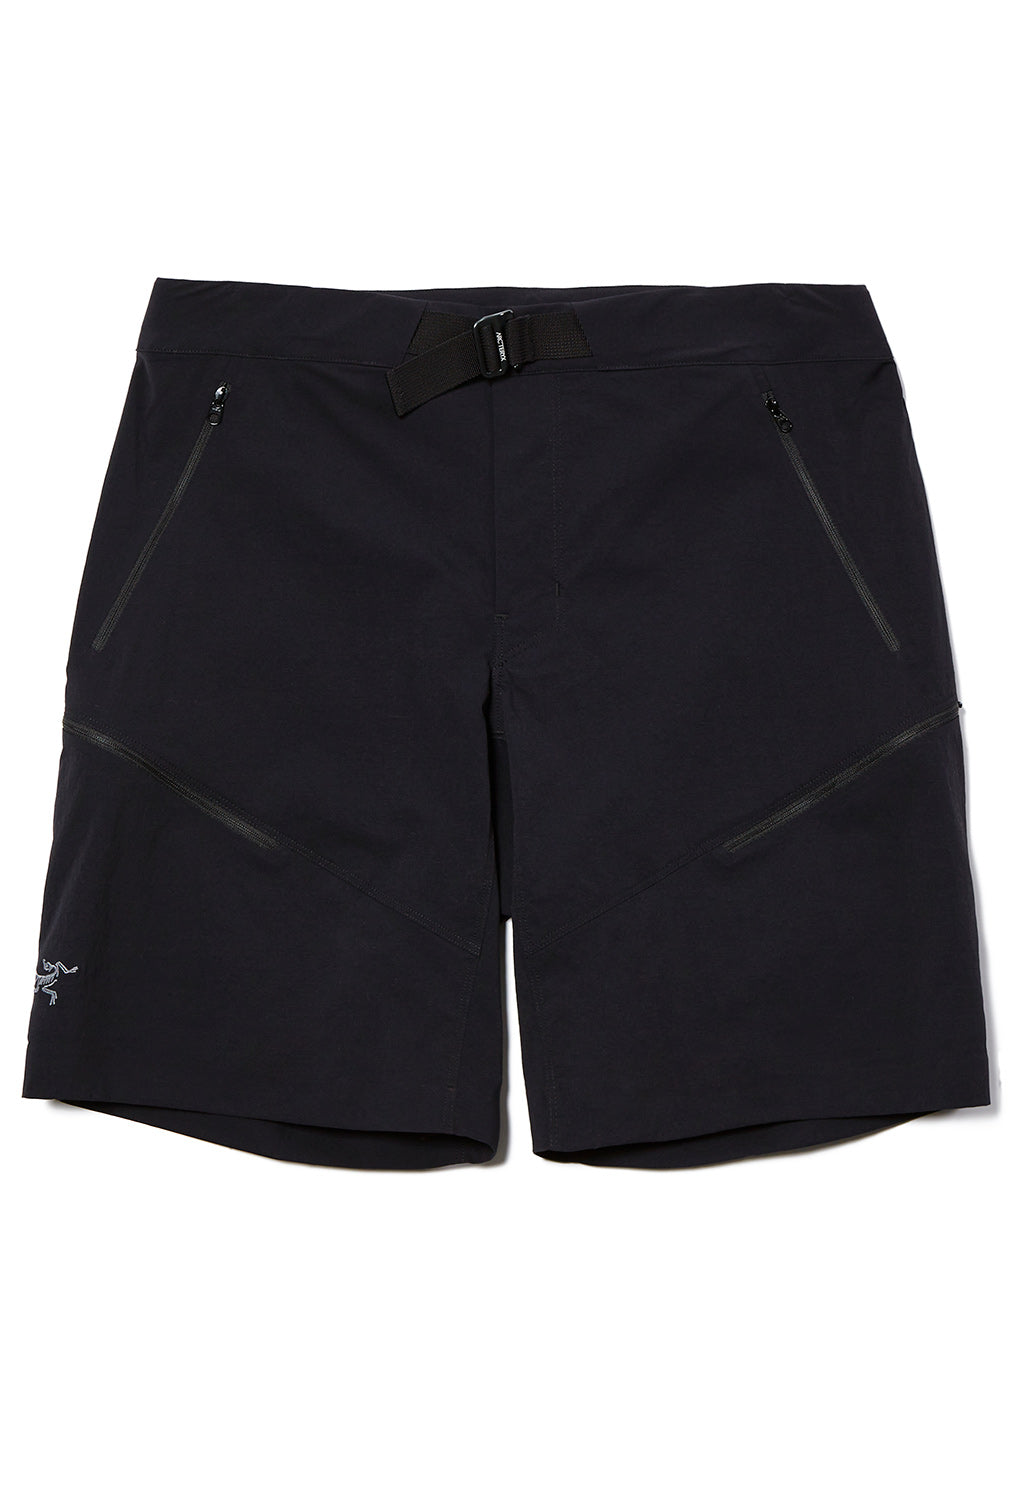 Arc'teryx Men's Gamma Quick Dry Shorts 9 inch 0